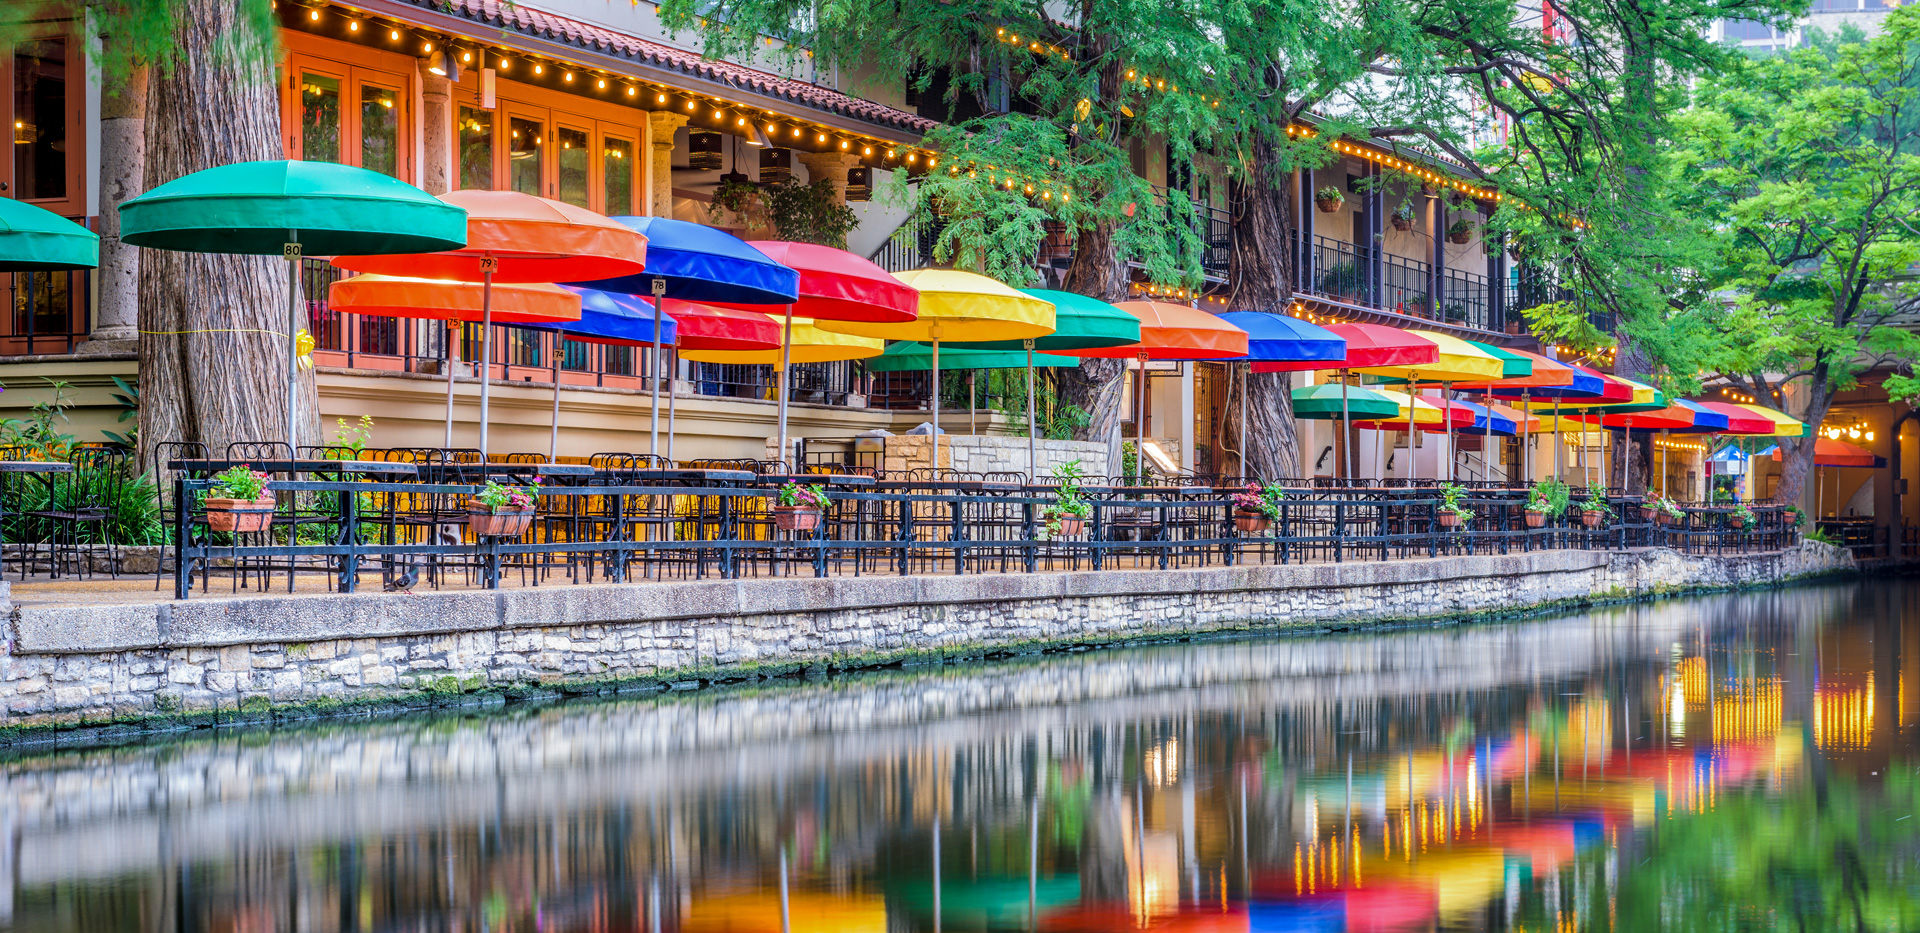 San Antonio Riverwalk umbrellas and river